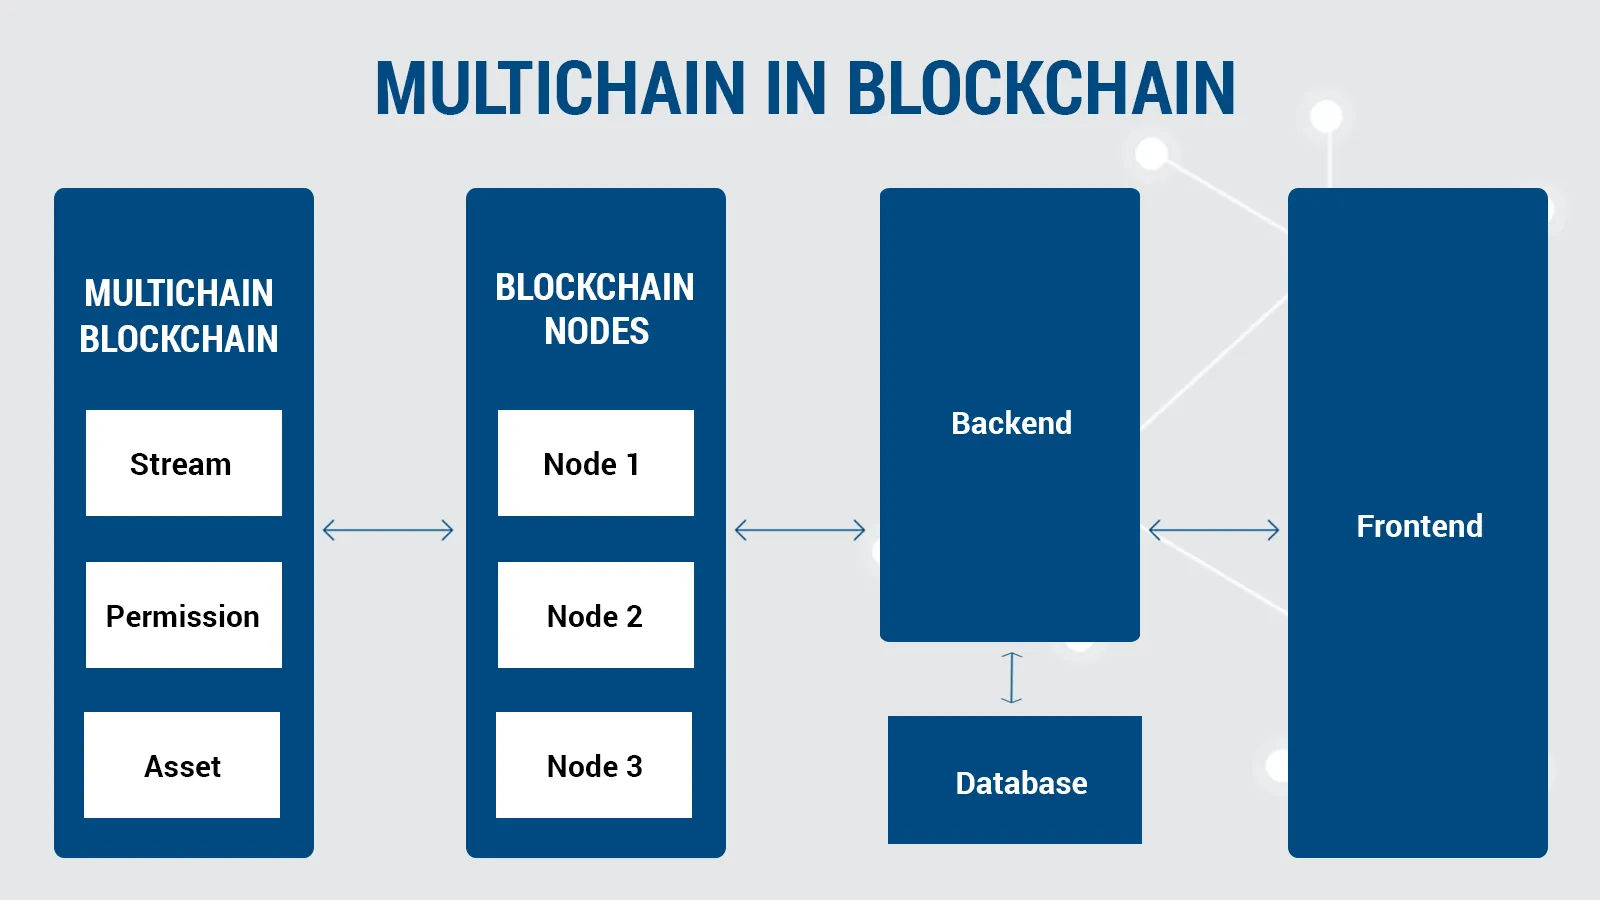 major platforms for blockchain